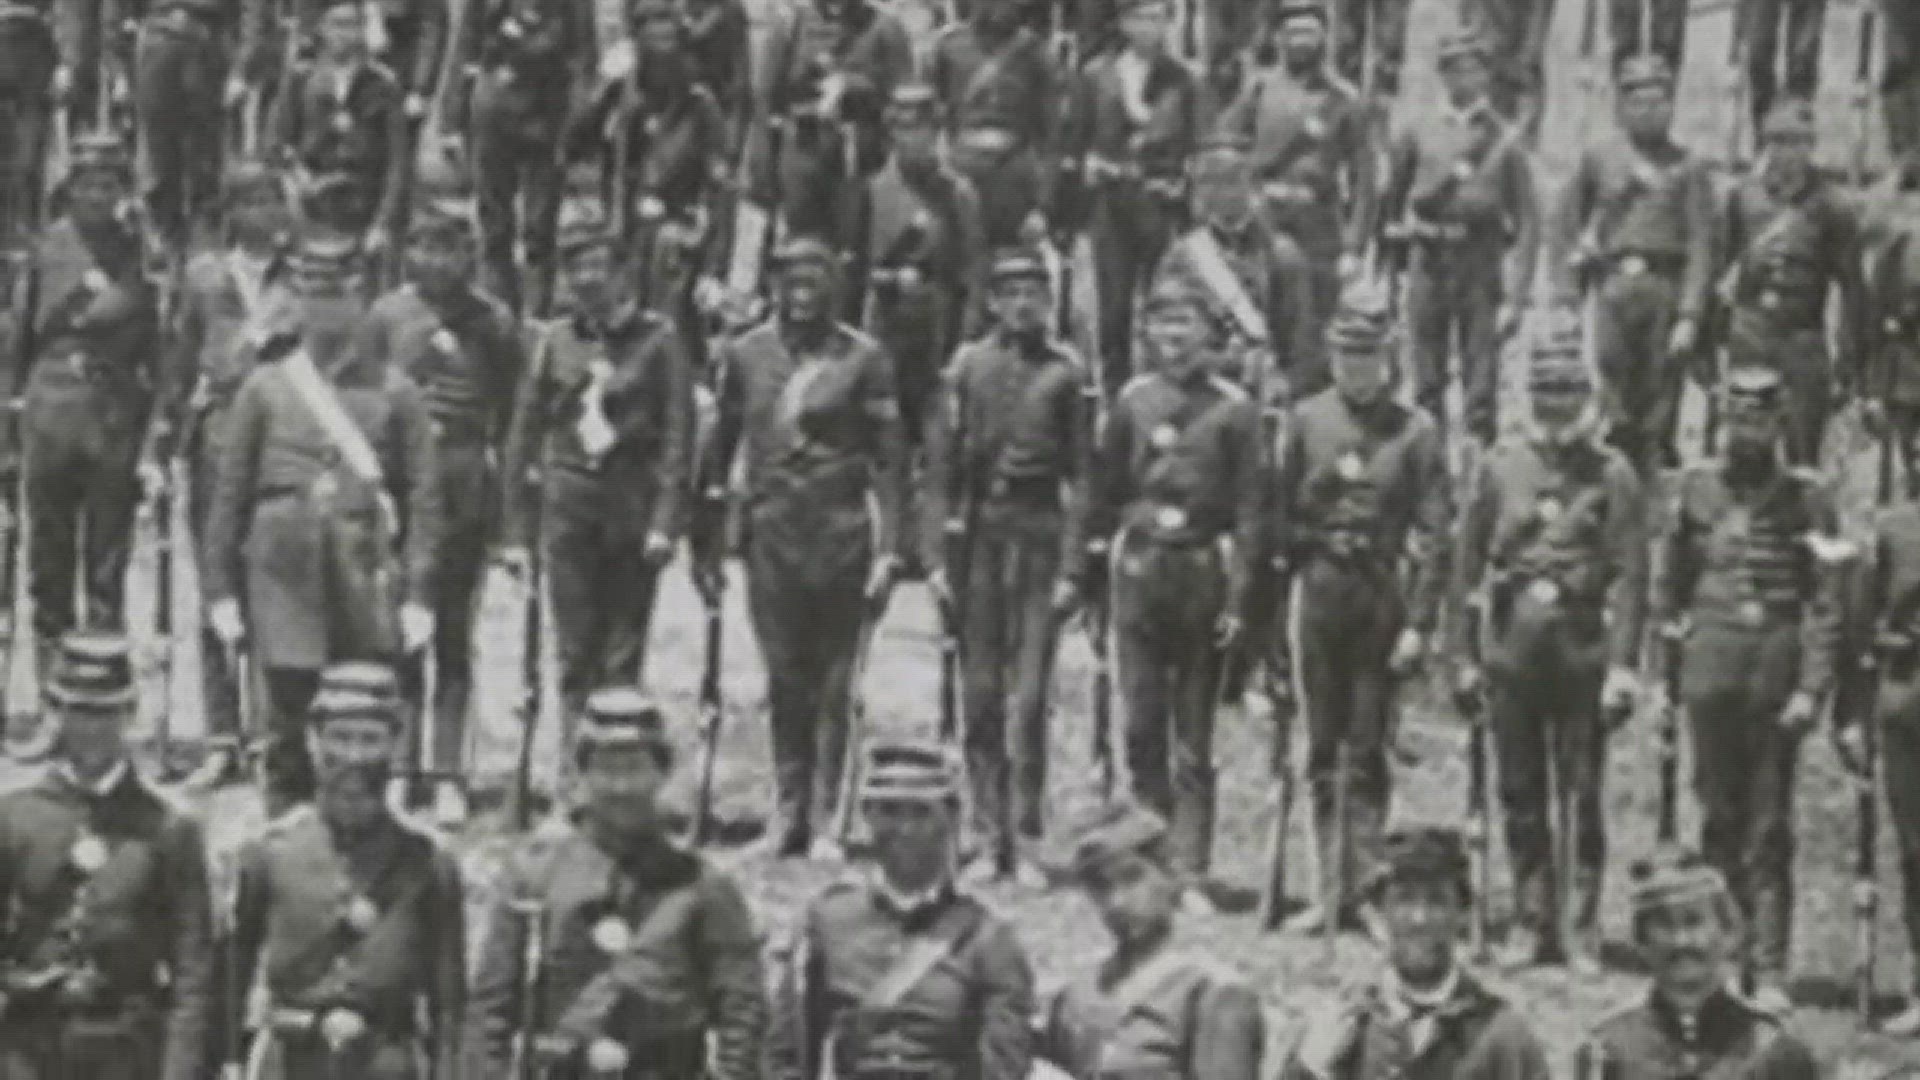 Home video brings 1938 Gettysburg reunion to life